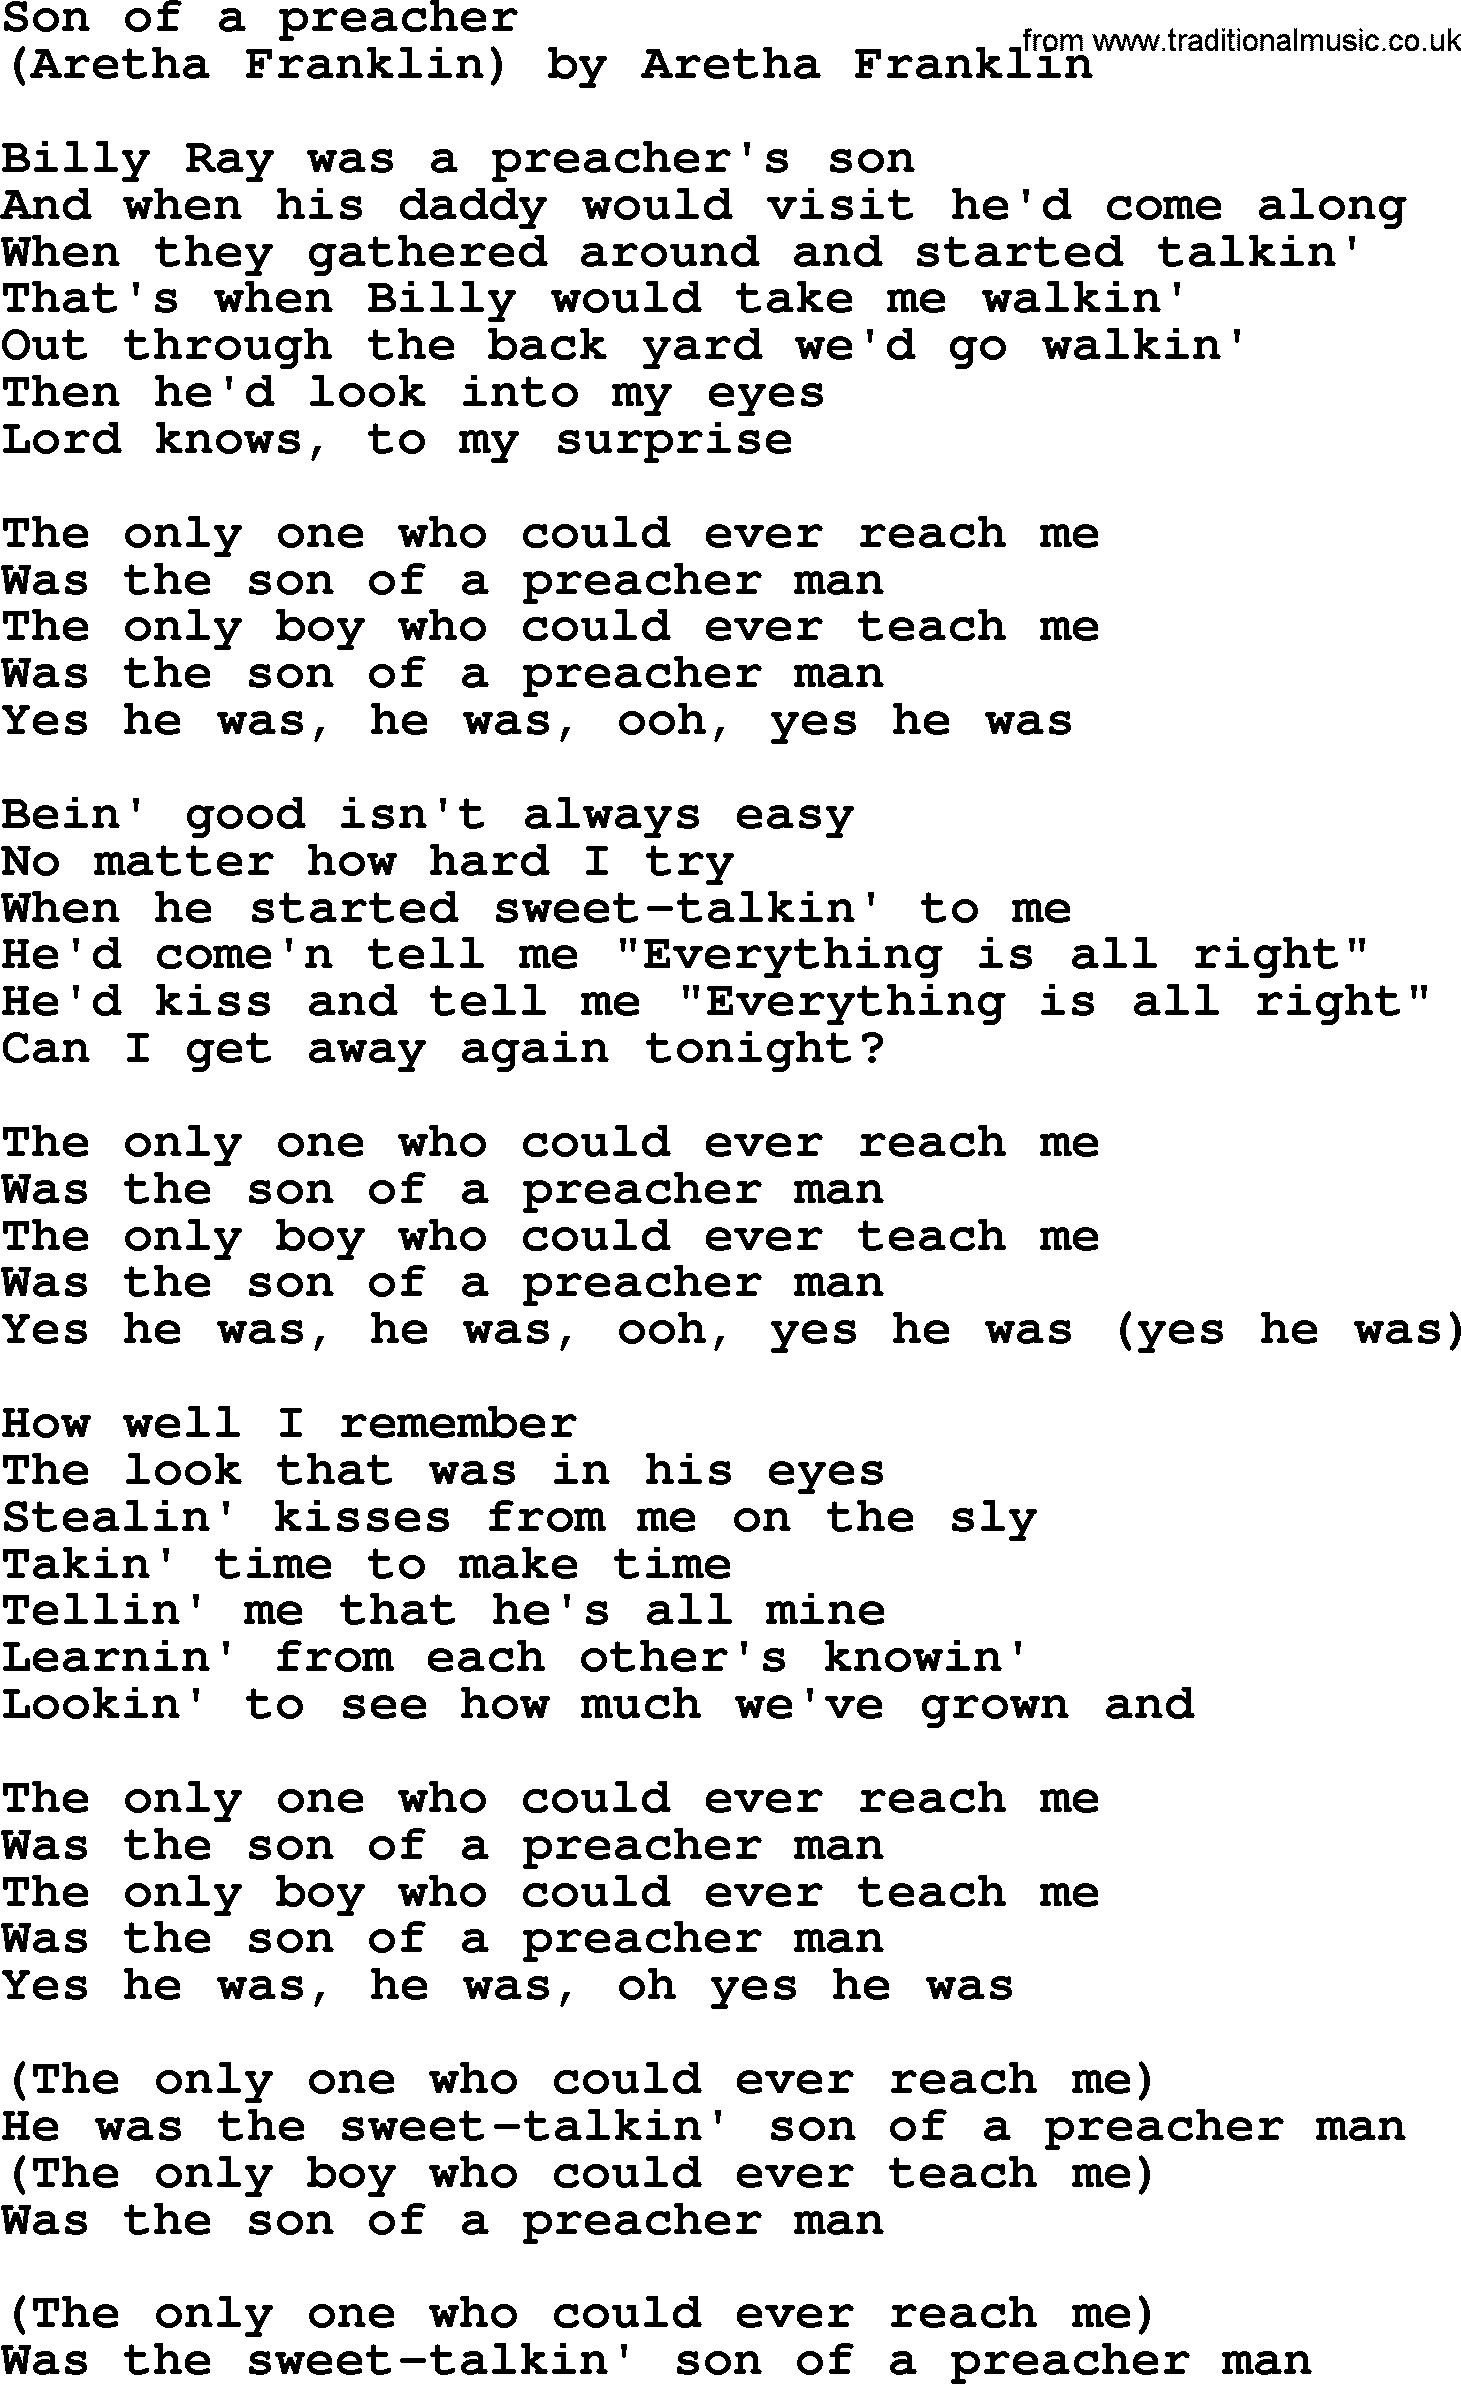 Bruce Springsteen song: Son Of A Preacher lyrics